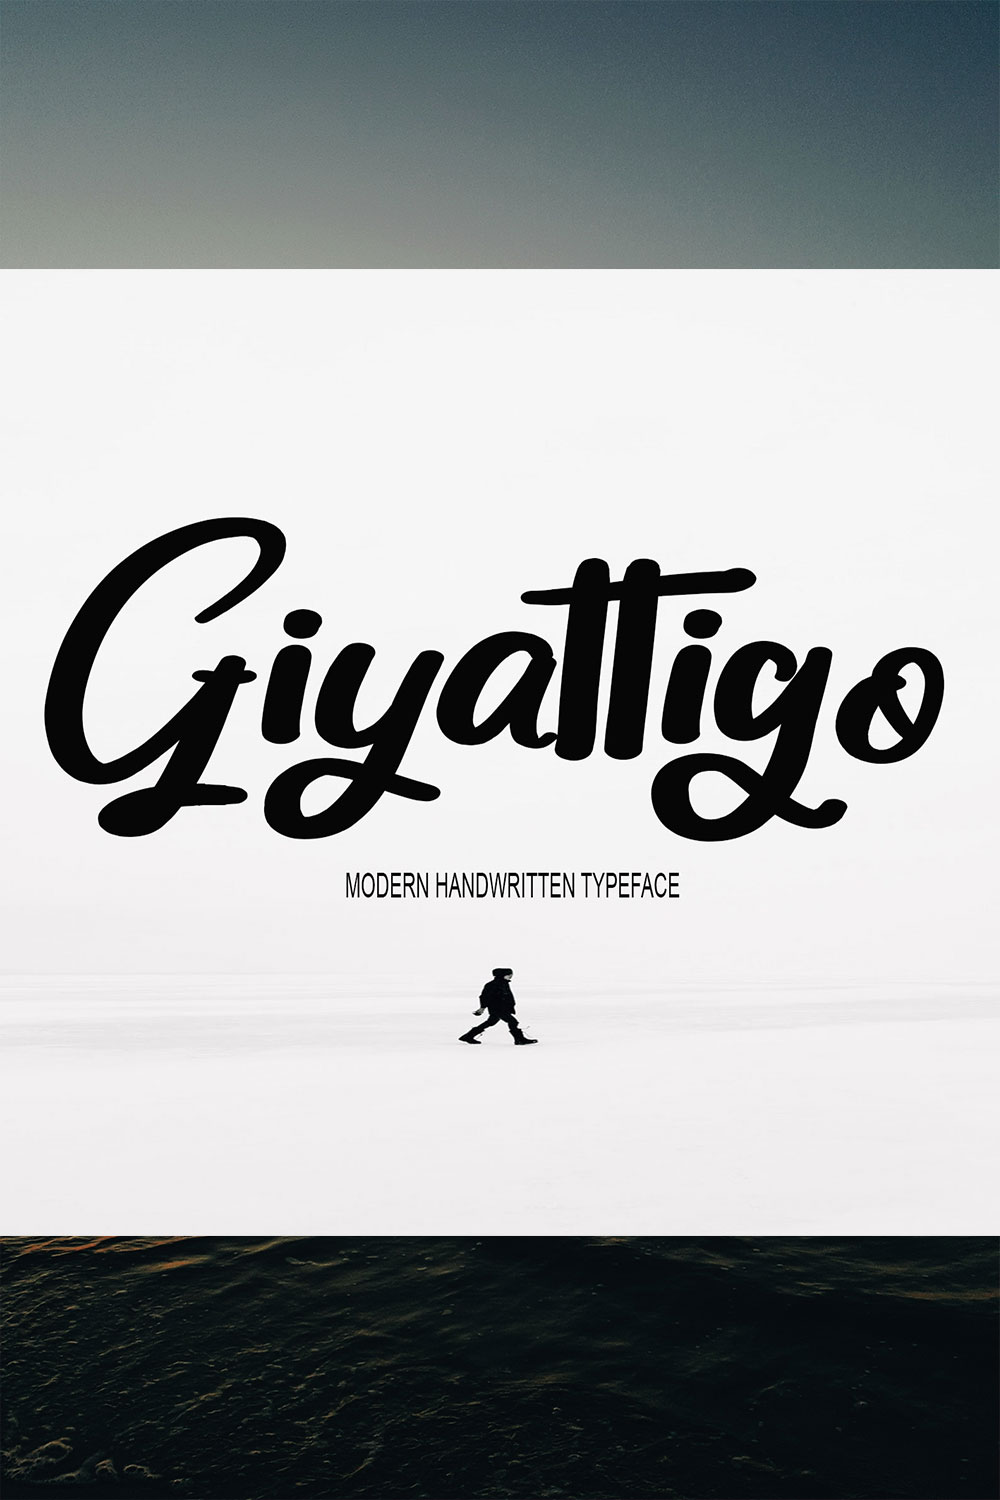 Giyattigo Signature Font Pinterest image.